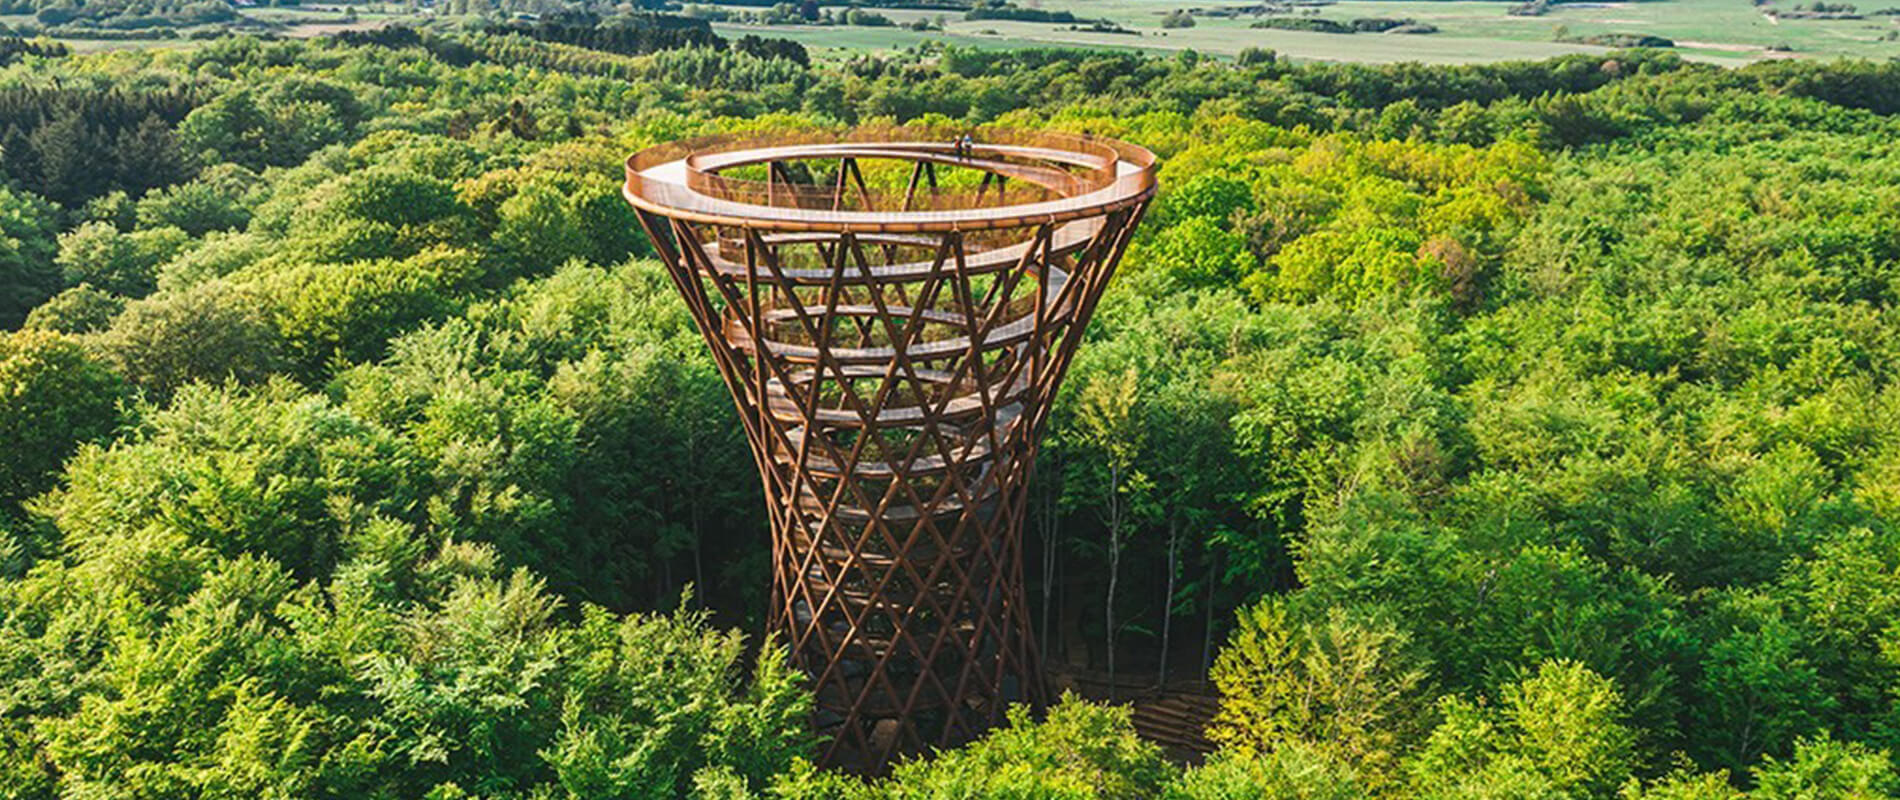 Forest Tower, la torre panoramica nella foresta danese
